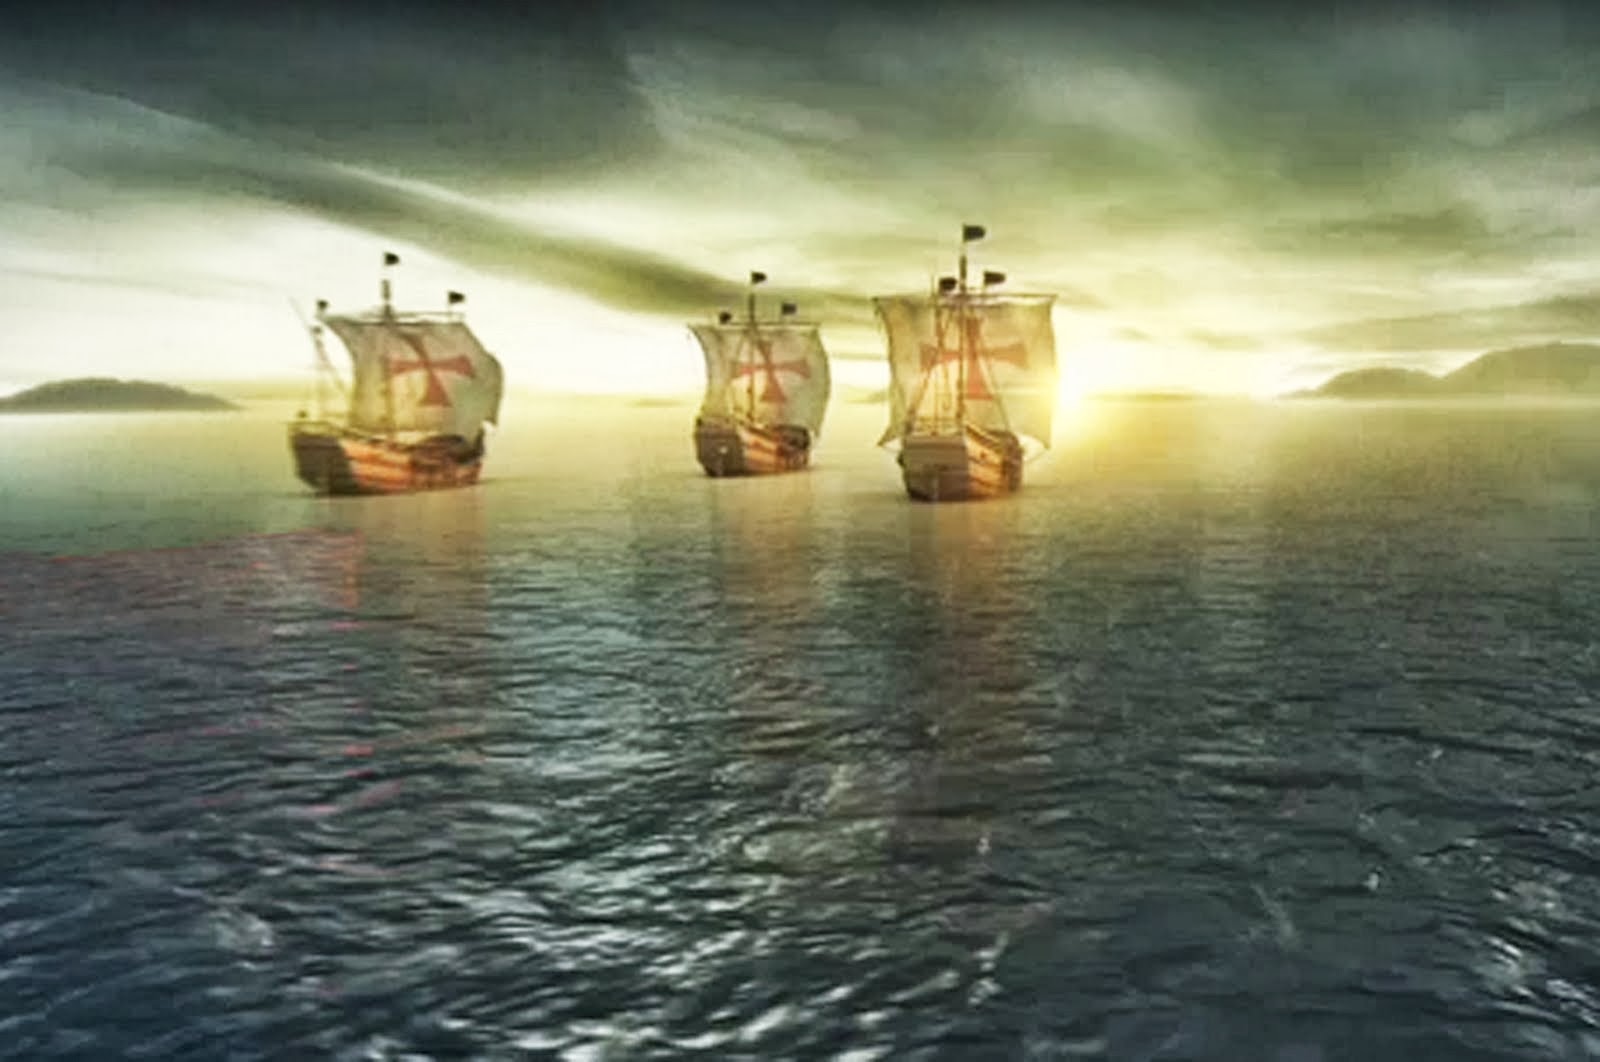 Who discovered them. Корабль Христофора Колумба. Фото Христофора Колумба на корабле.